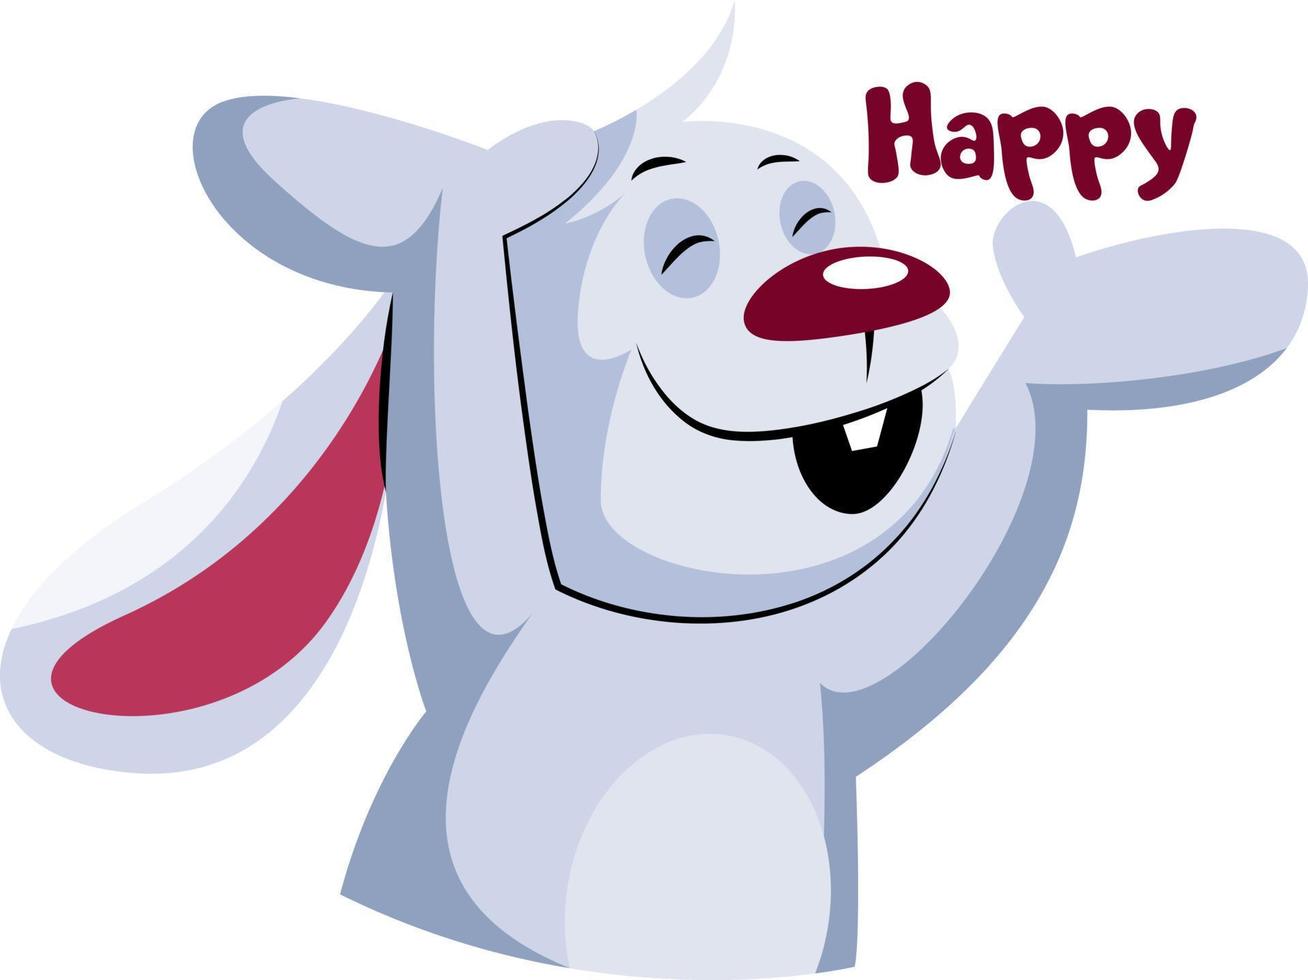 Happy white rabbit vector illustration on a white background